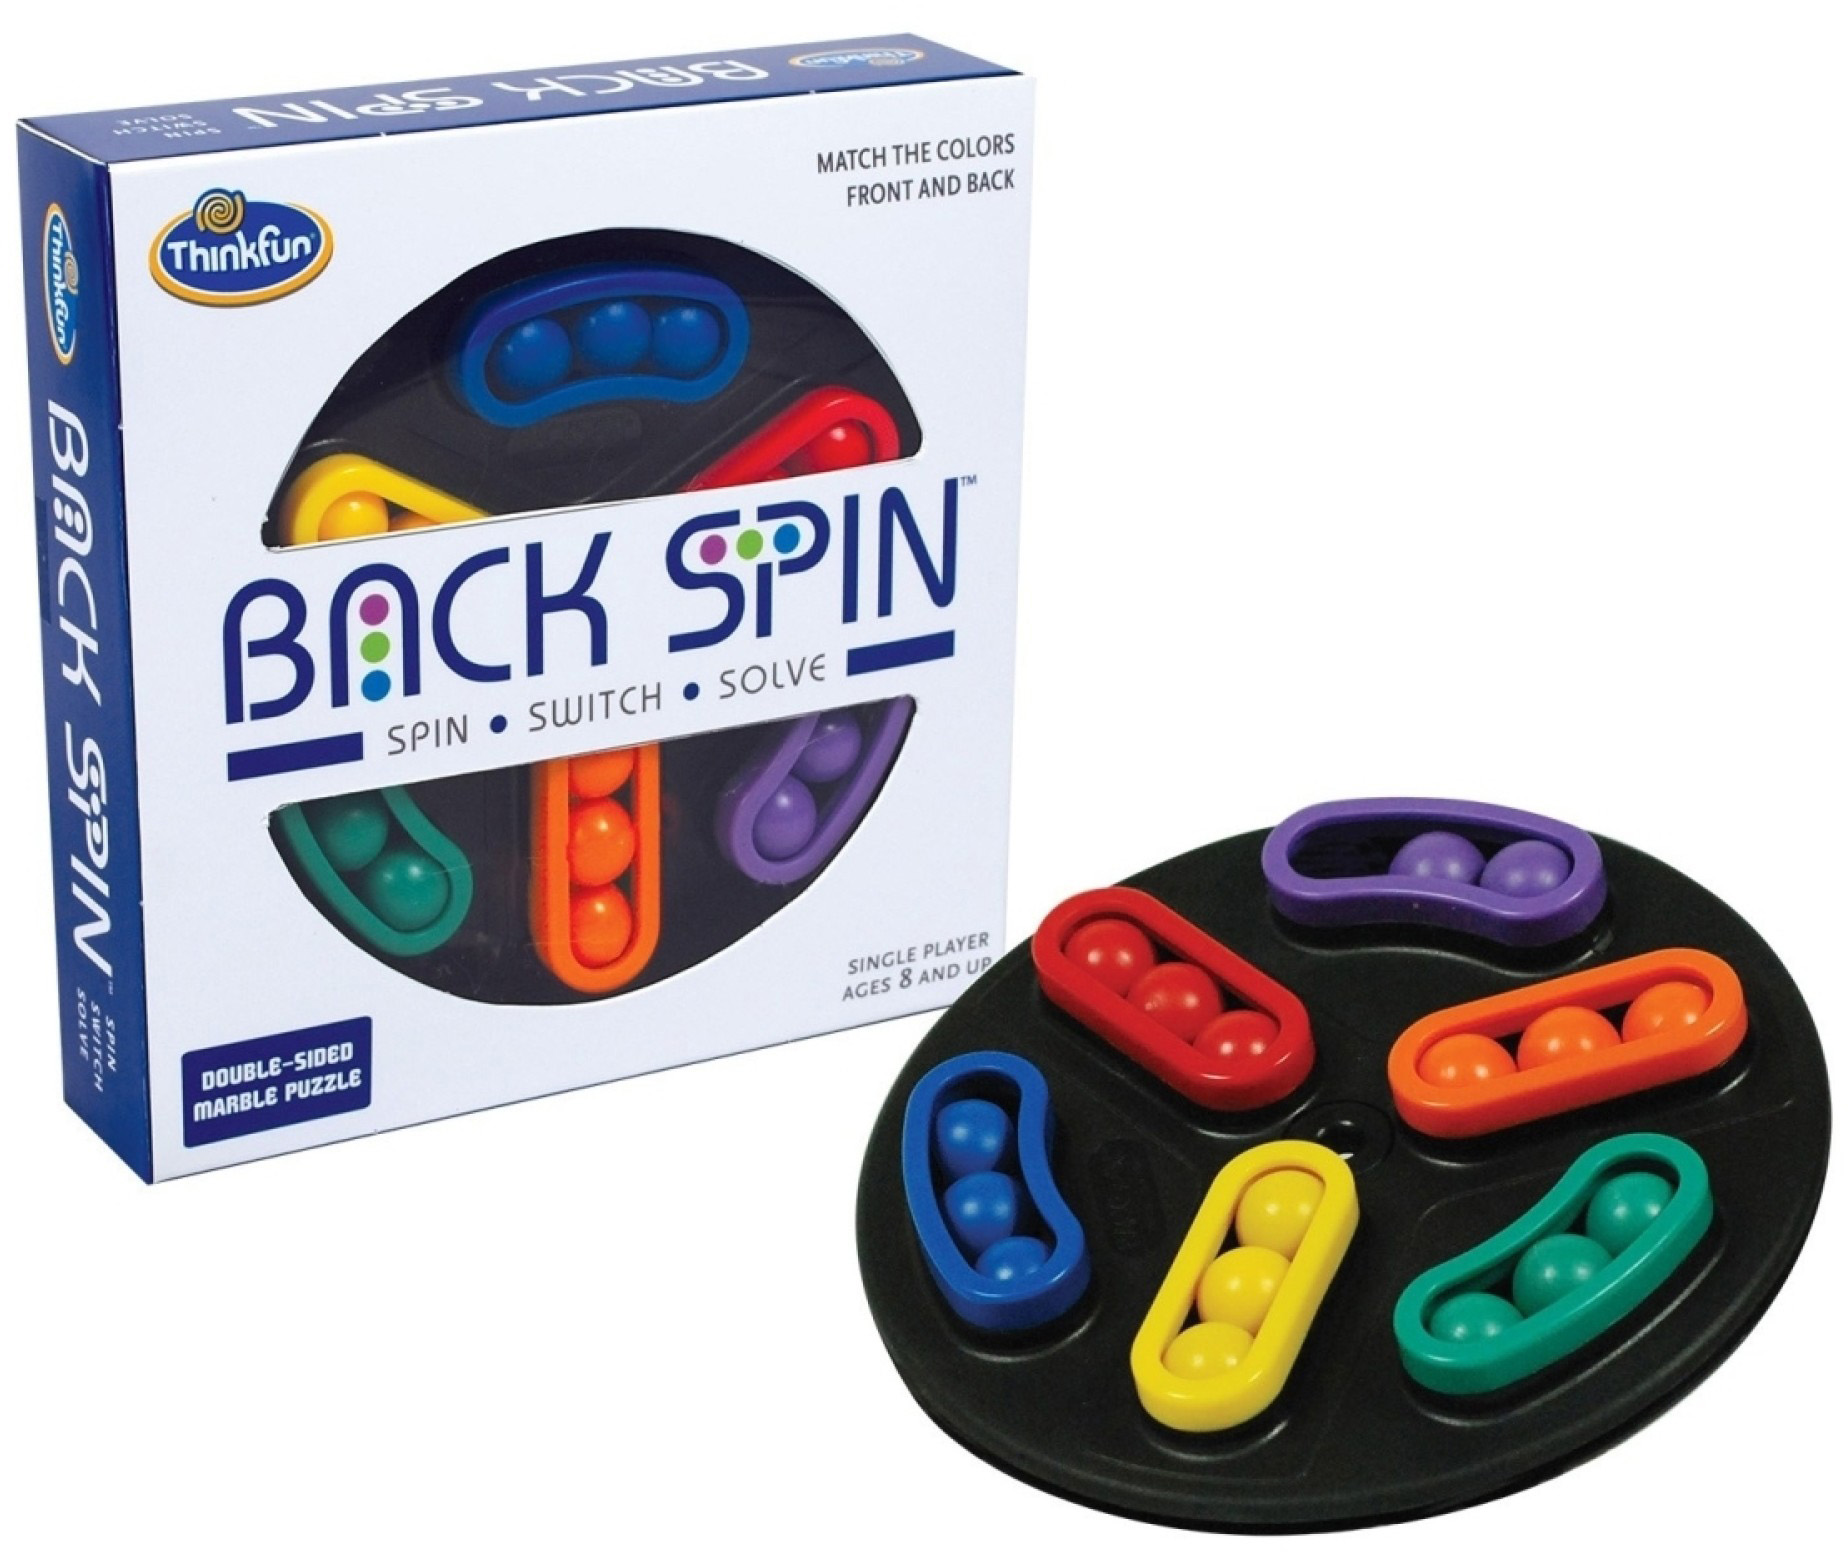 Back spin